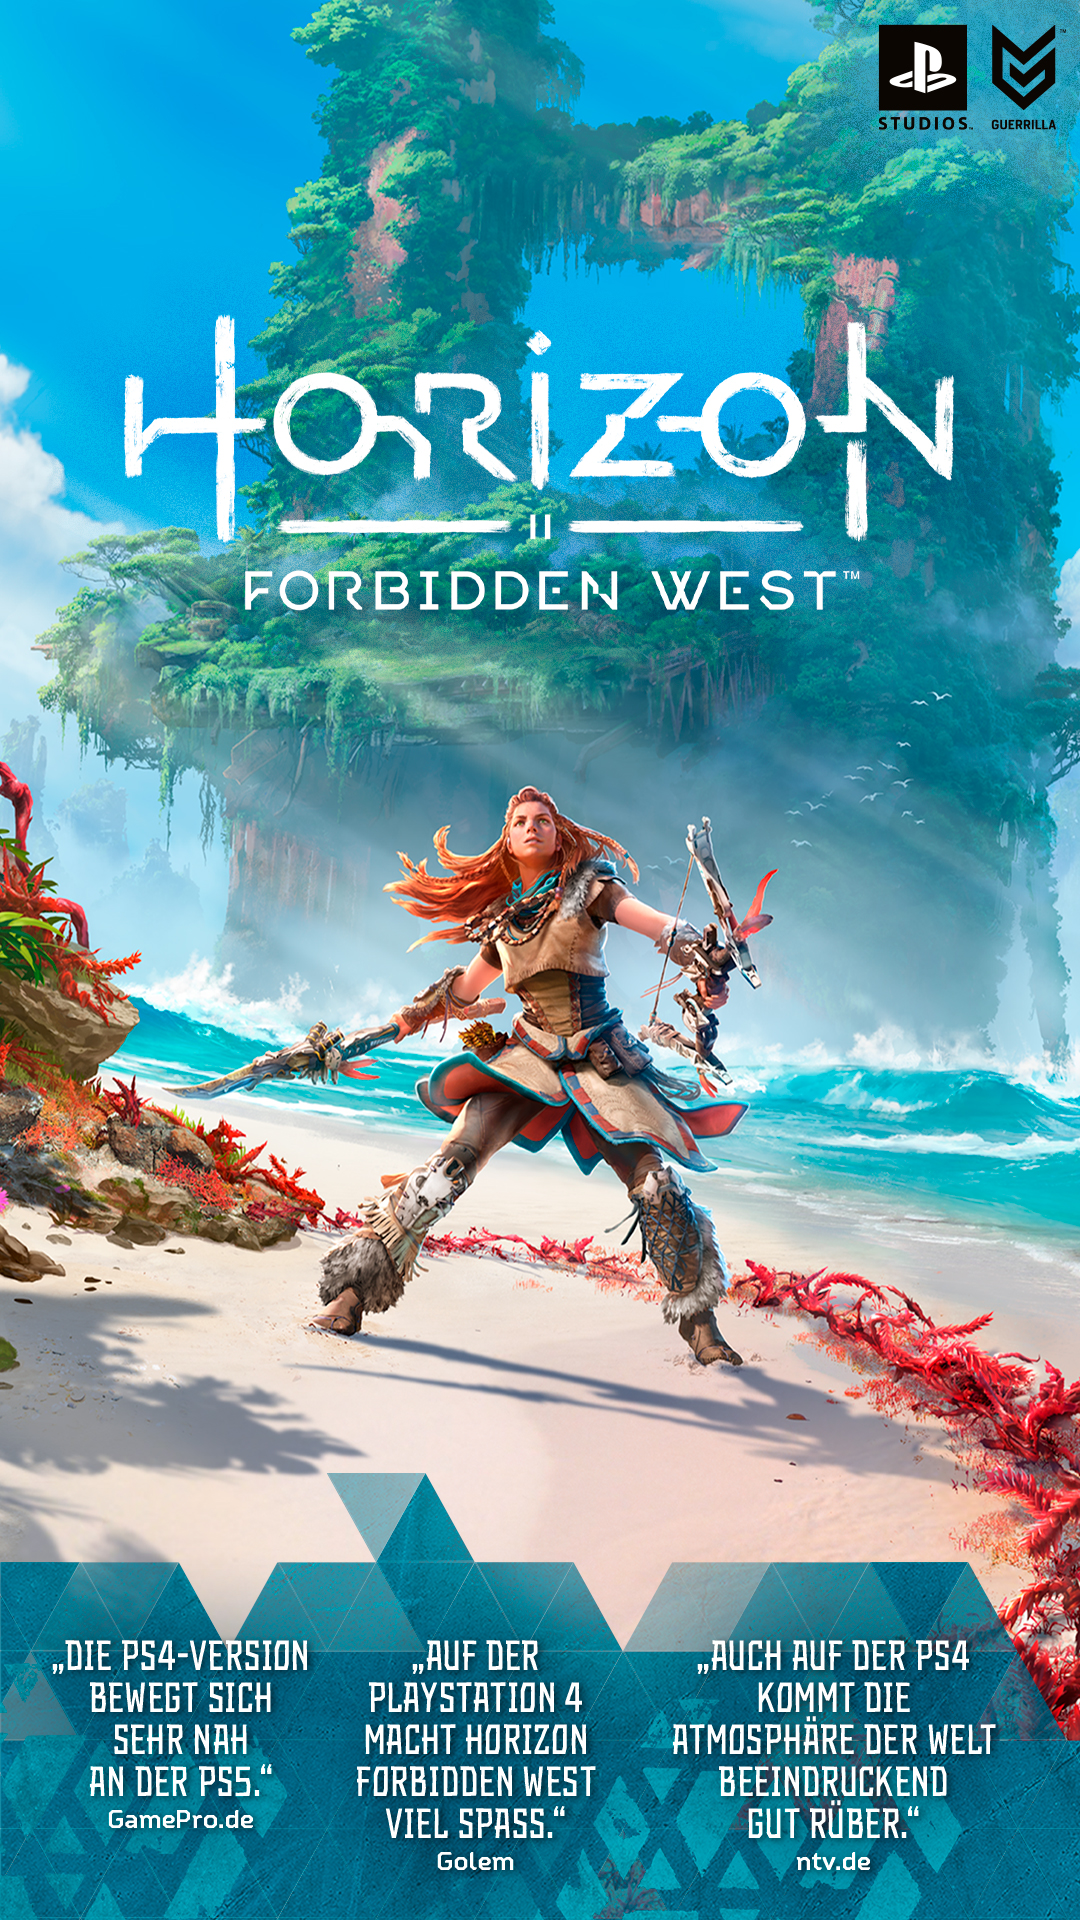 Forbidden West Horizon 4] - [PlayStation